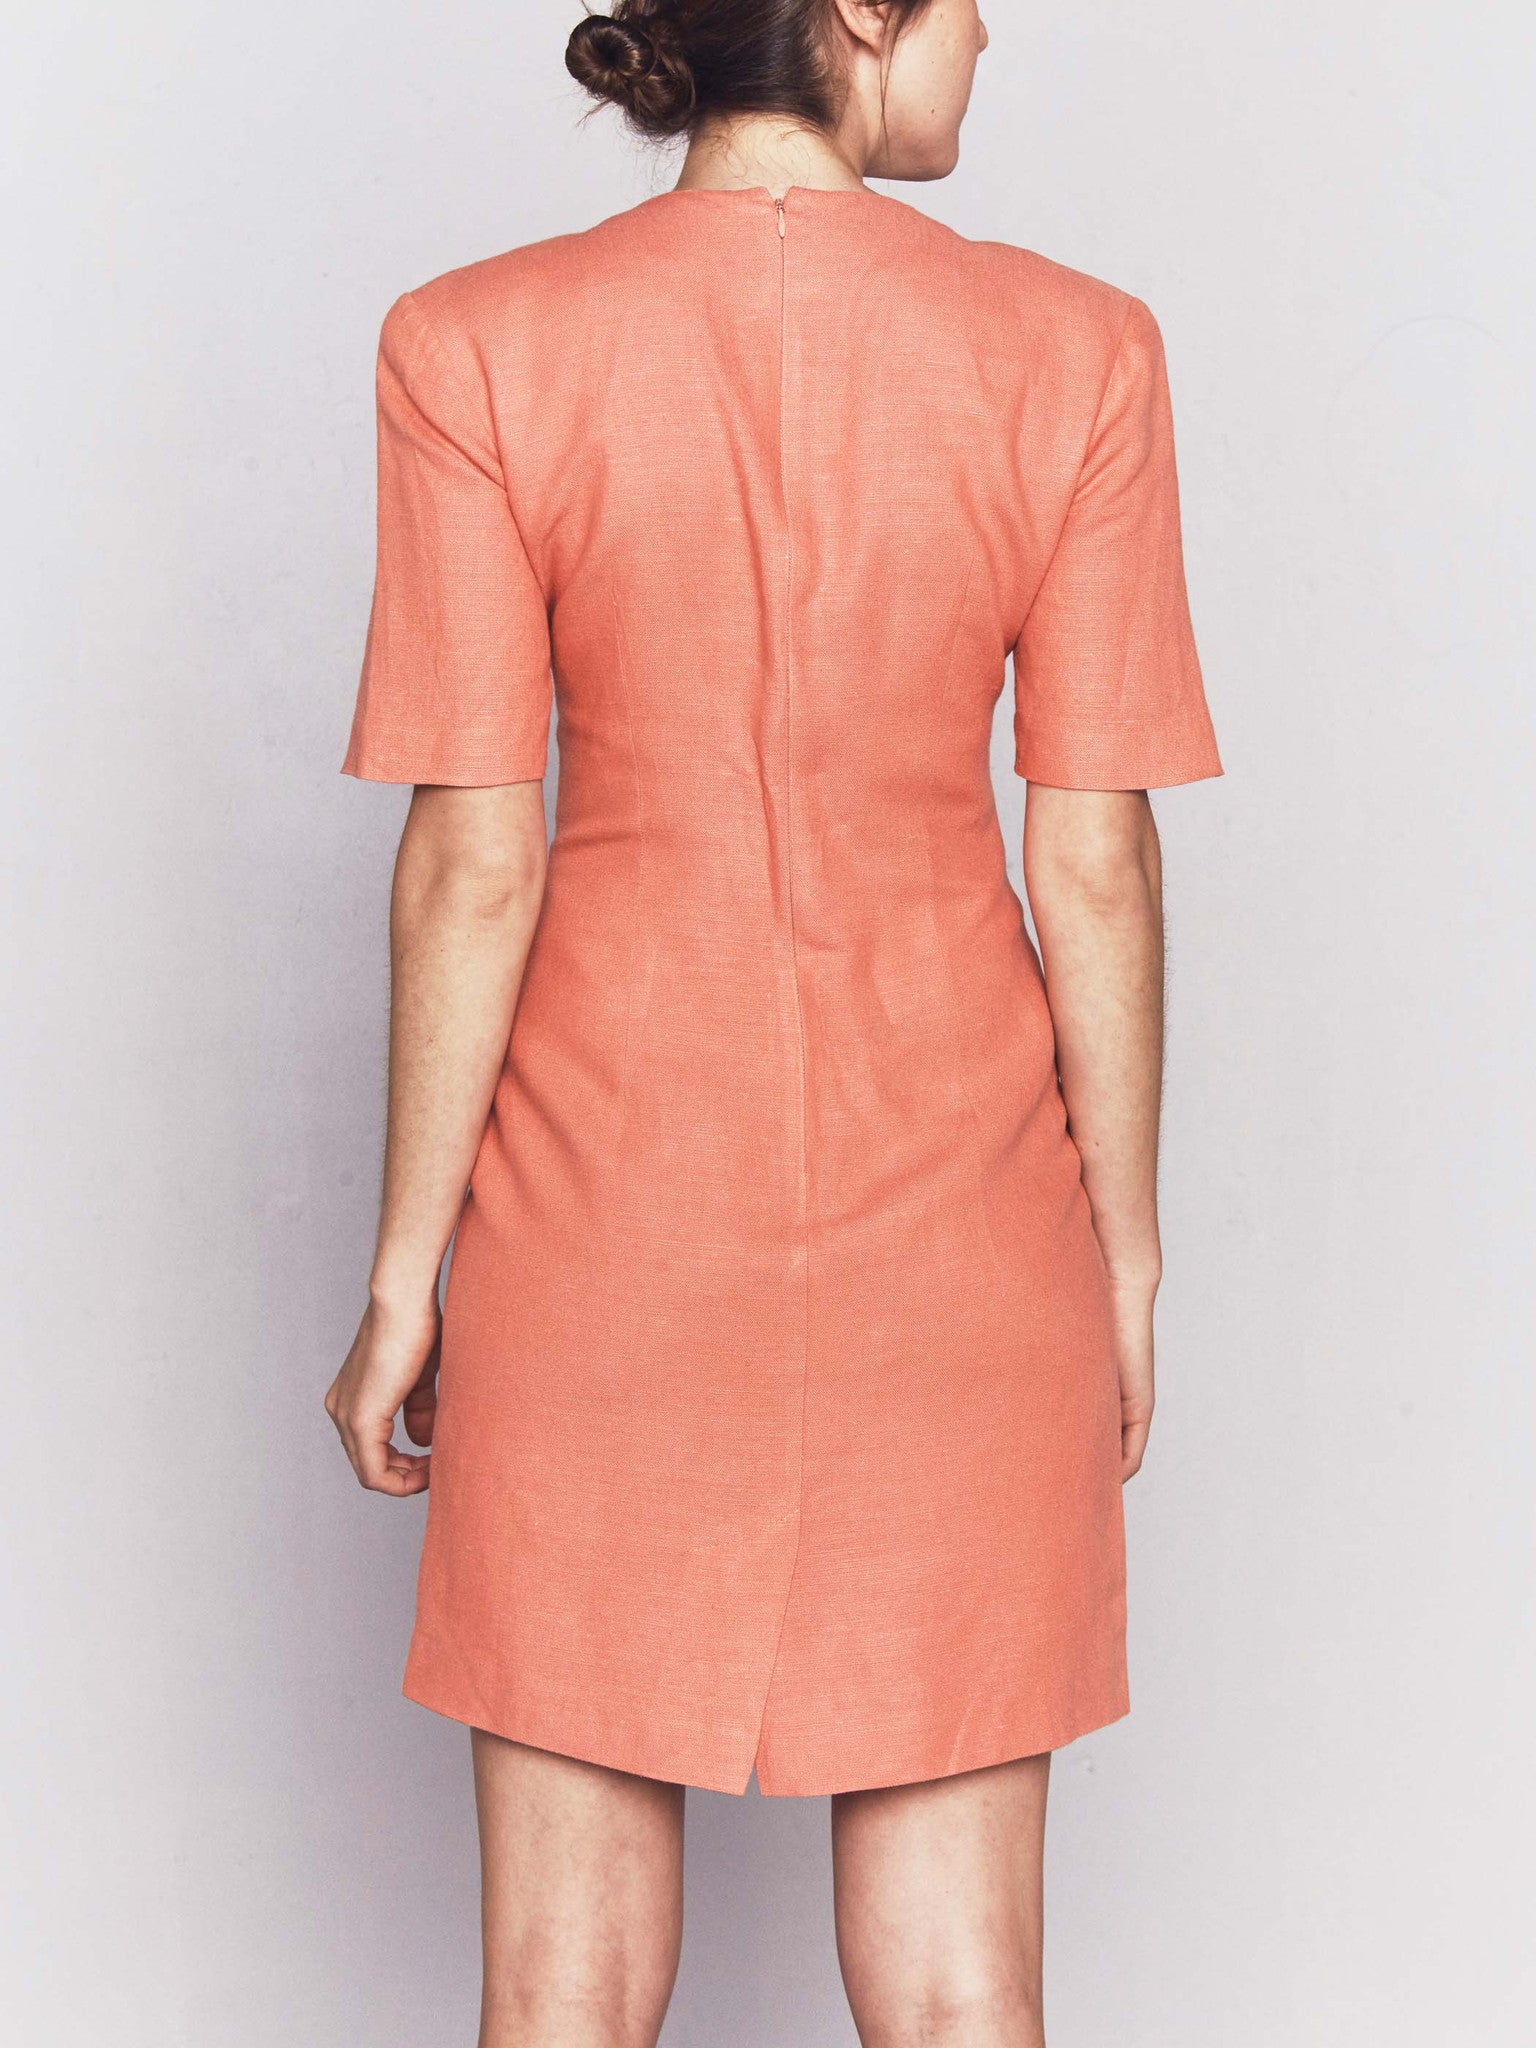 coral linen dress